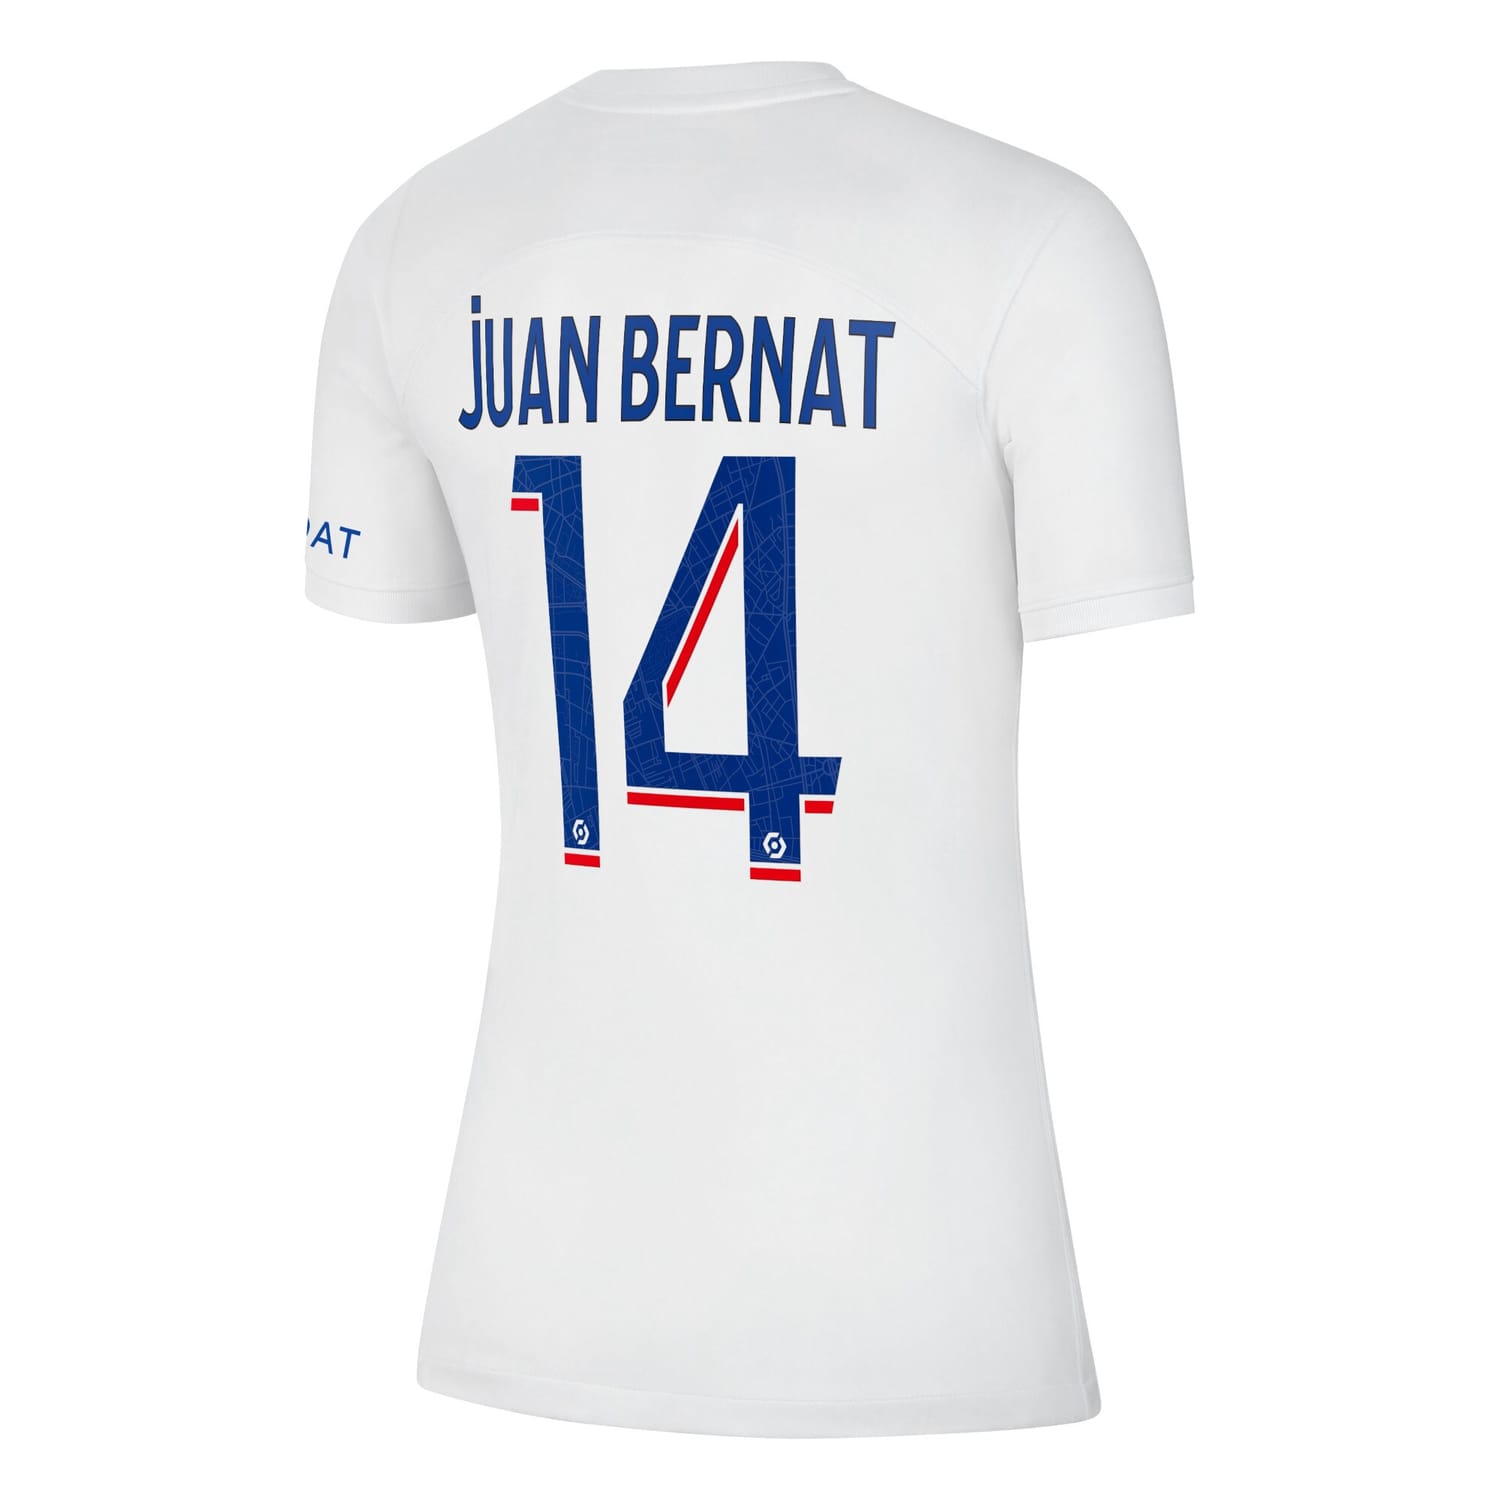 Ligue 1 Paris Saint-Germain Third Jersey Shirt 2022-23 player Juan Bernat 14 printing for Women